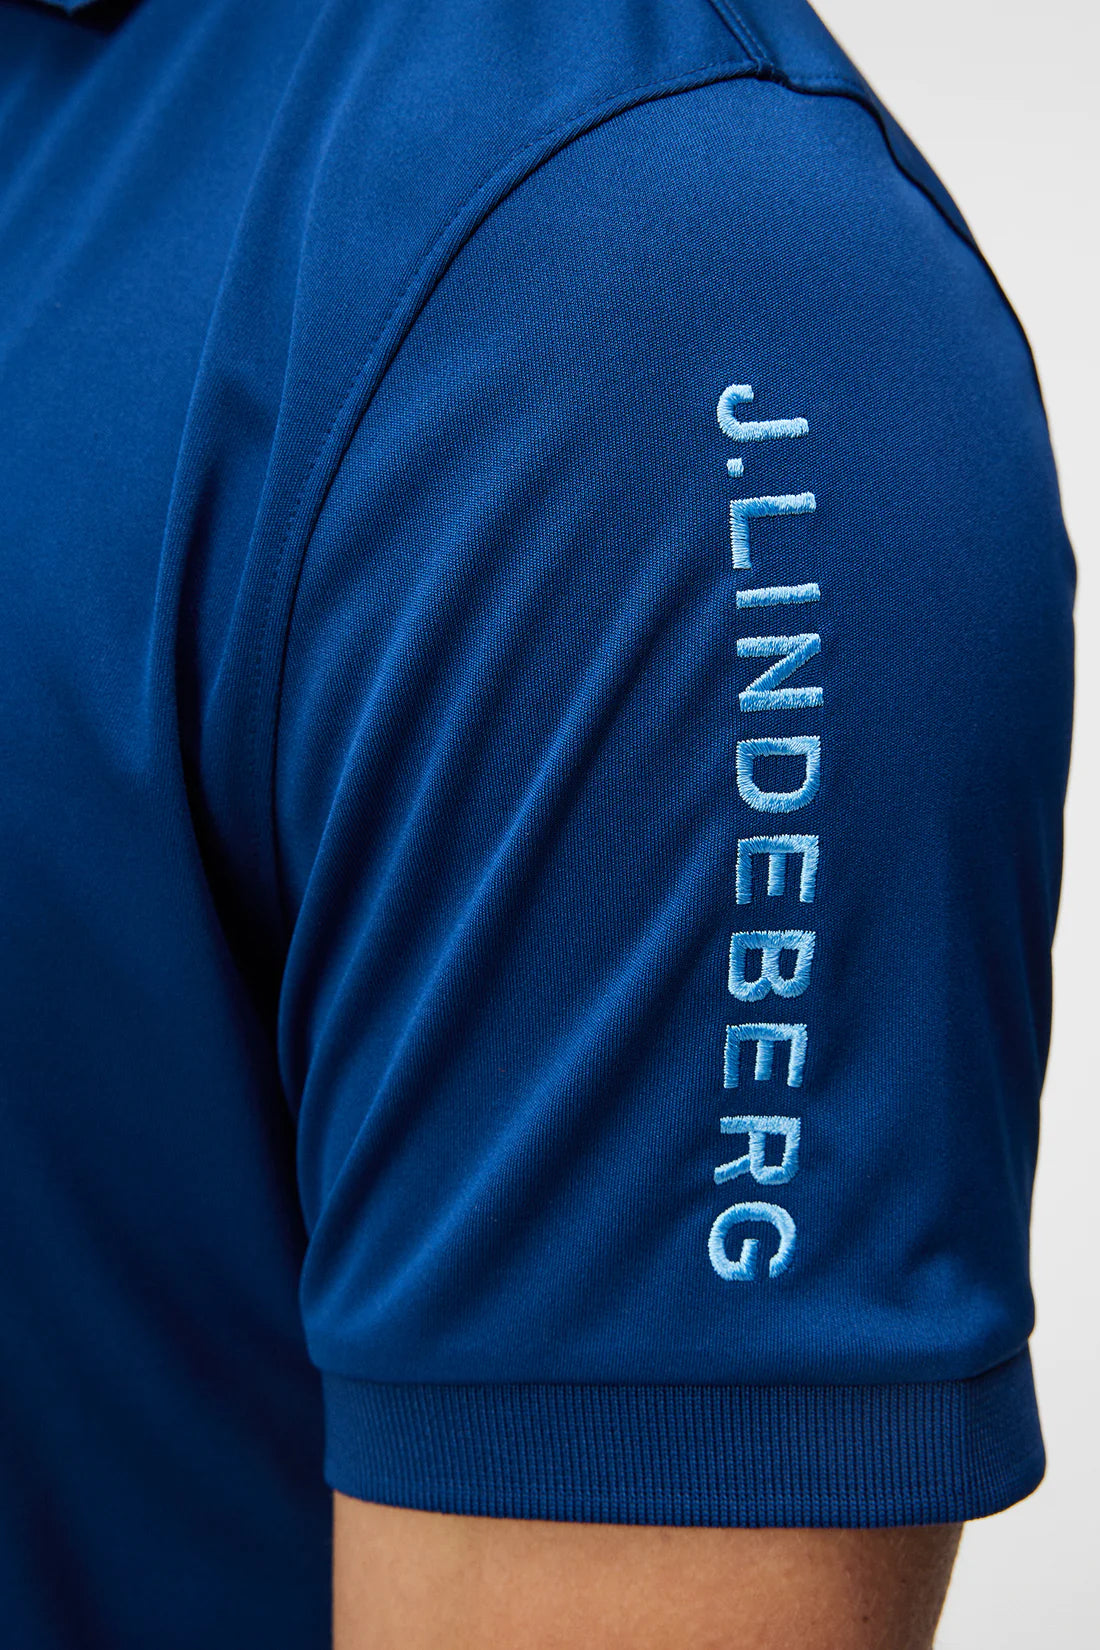 【特價 】J LINDEBERG TOUR TECH 常規版 POLO 衫(莊園藍) -GMJT08836-O341